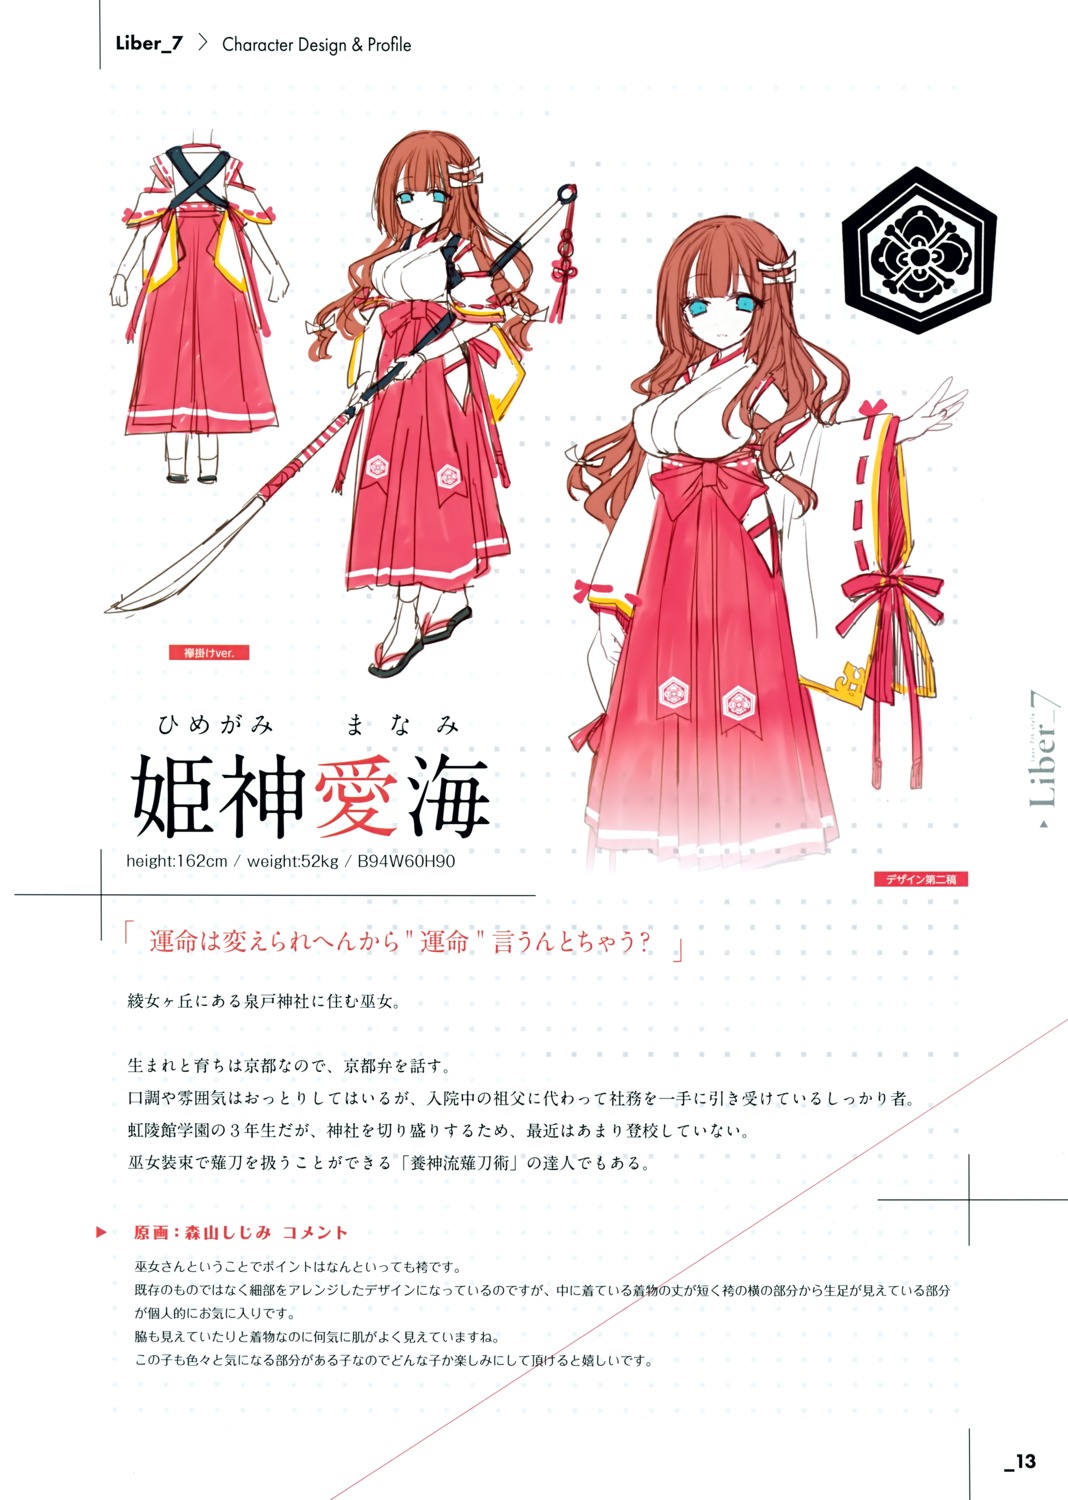 Lass Moriyama Shijimi Liber 7 Himegami Manami Character Design Miko Sketch Weapon Yande Re